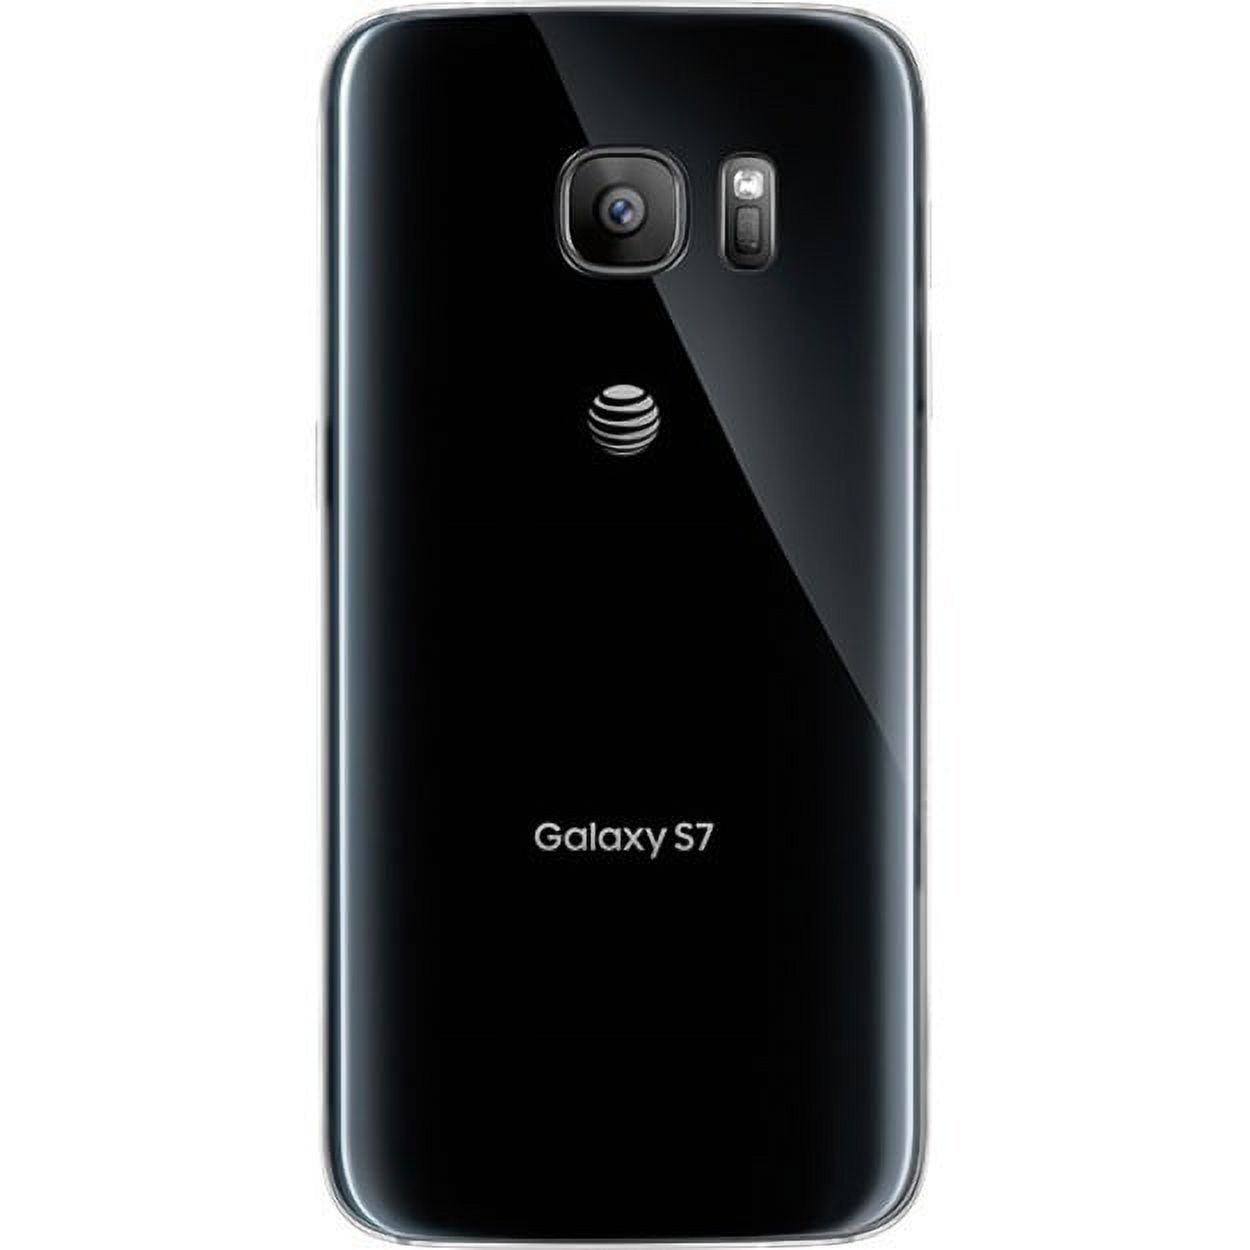 Samsung Galaxy S7 Unlocked 32GB GSM and CDMA Smartphone, Black Onyx - image 2 of 4